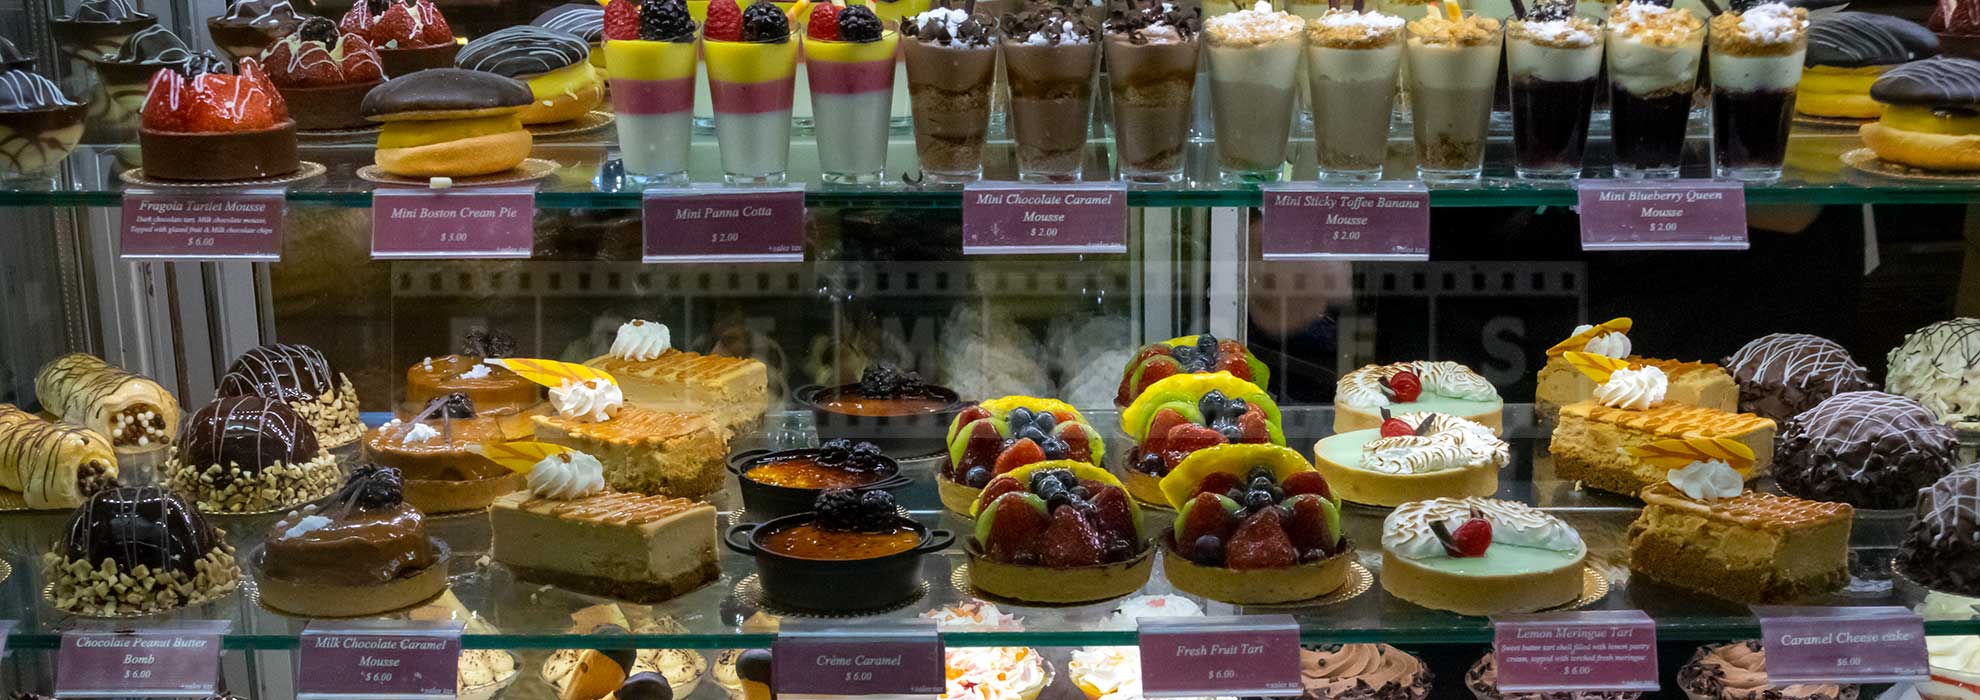 colorful desserts display at Caesar's casino buffet